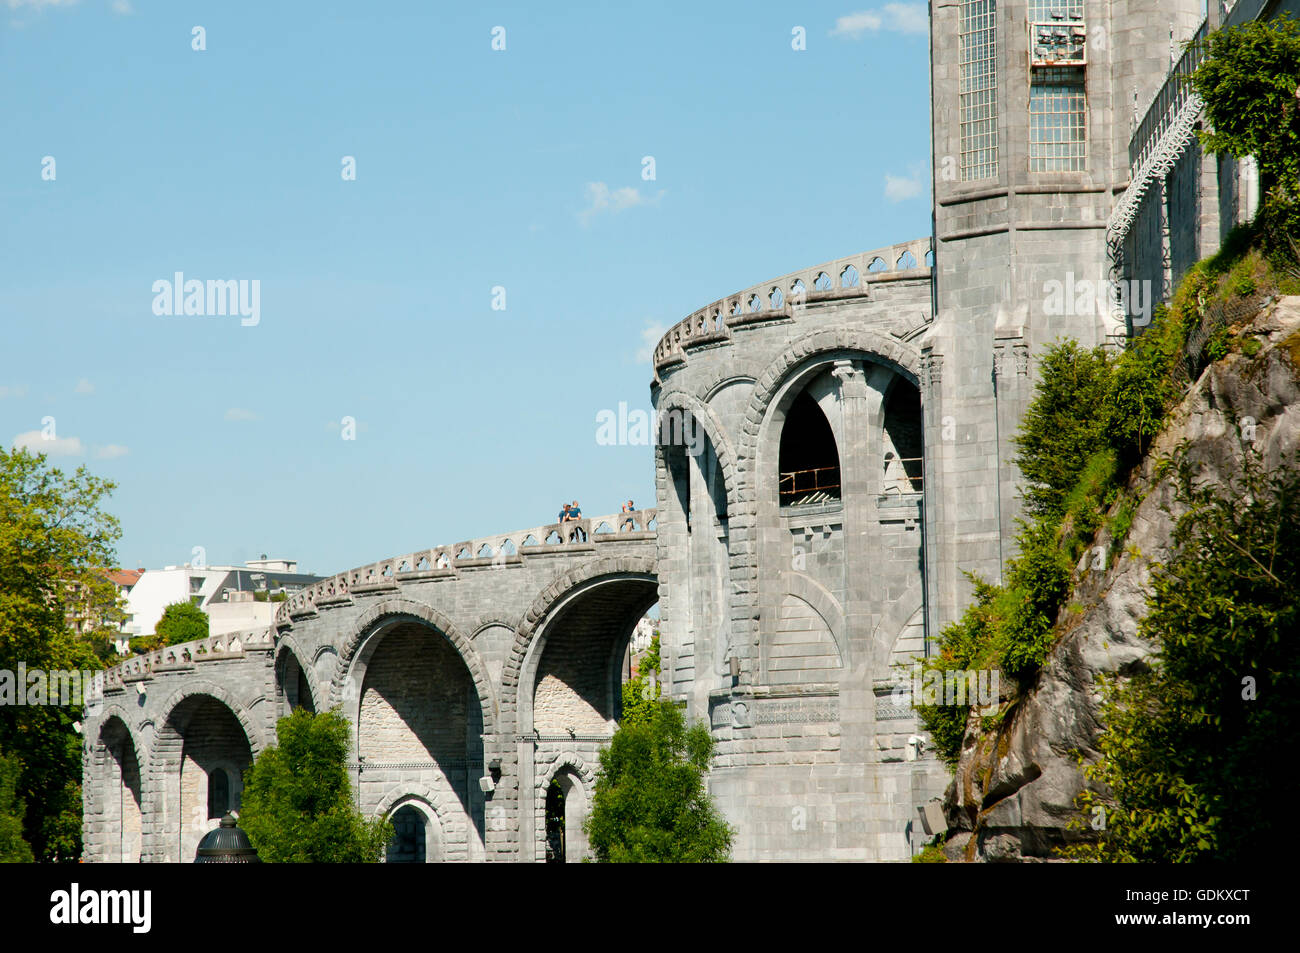 Our Lady of Lourdes Sanctuary Basilica - France Stock Photo